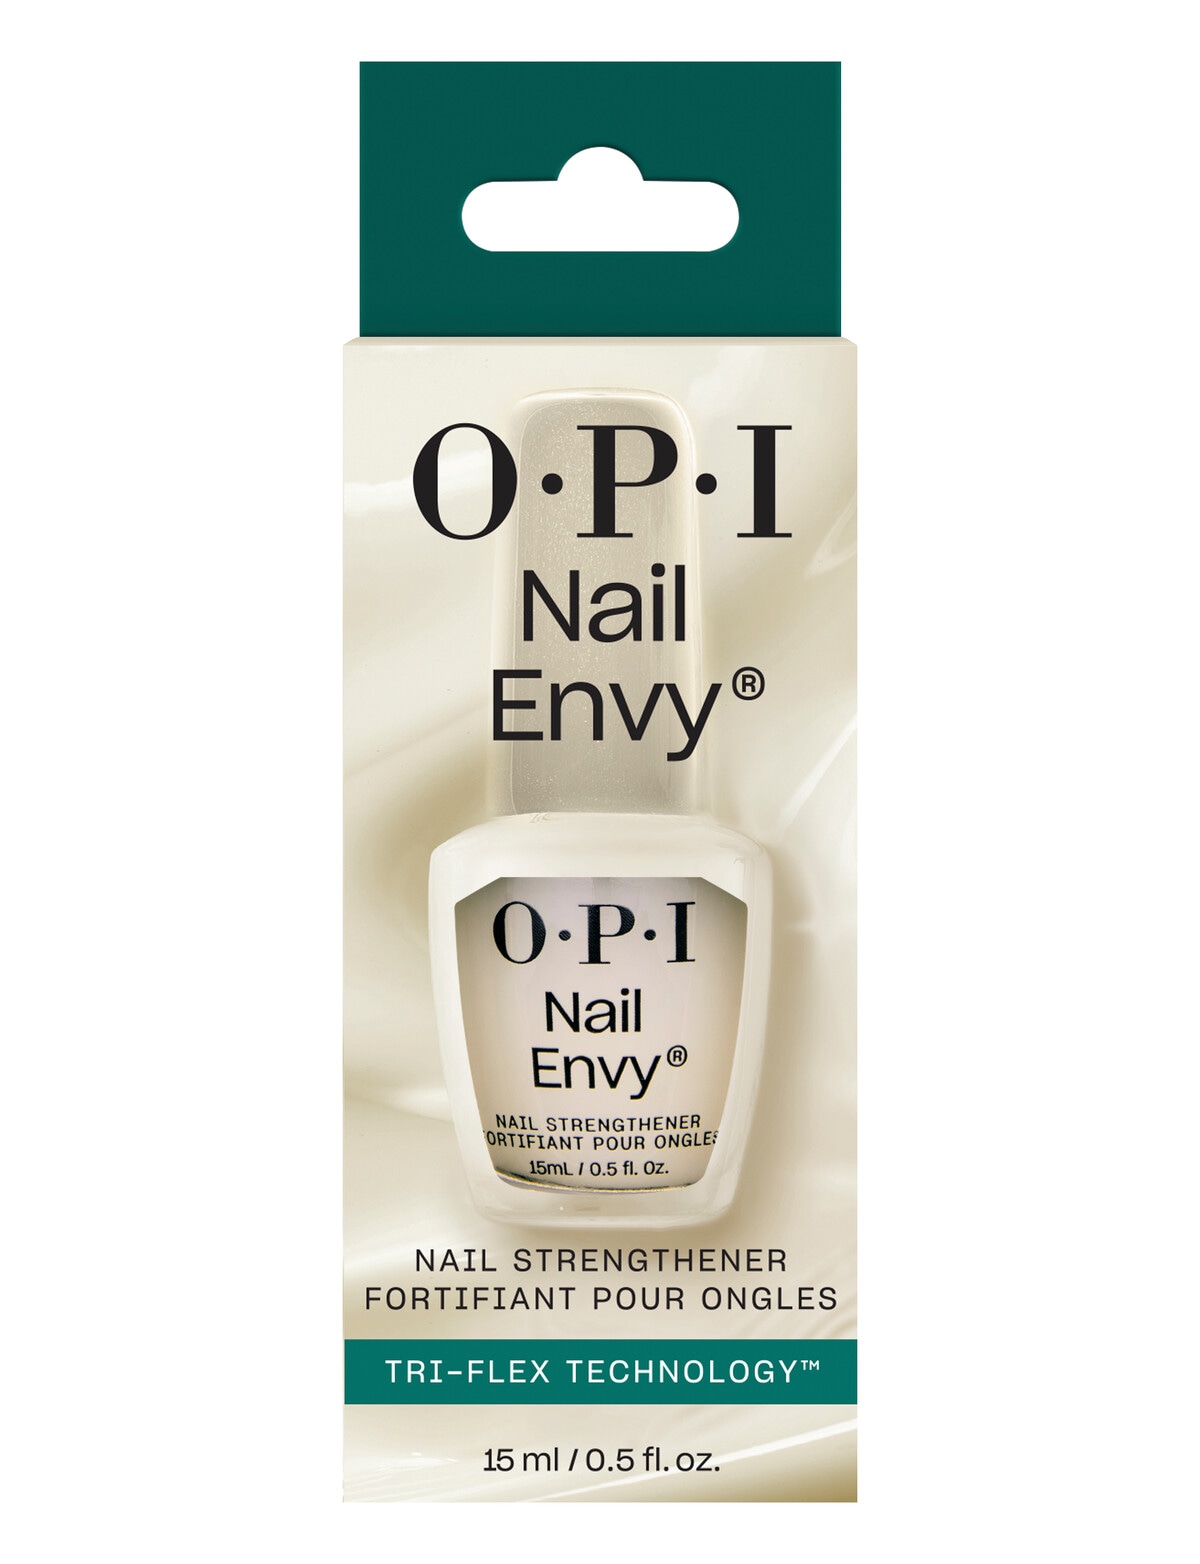 OPI Nail Envy Strengthener - OPI - Nail care | Shopping4net